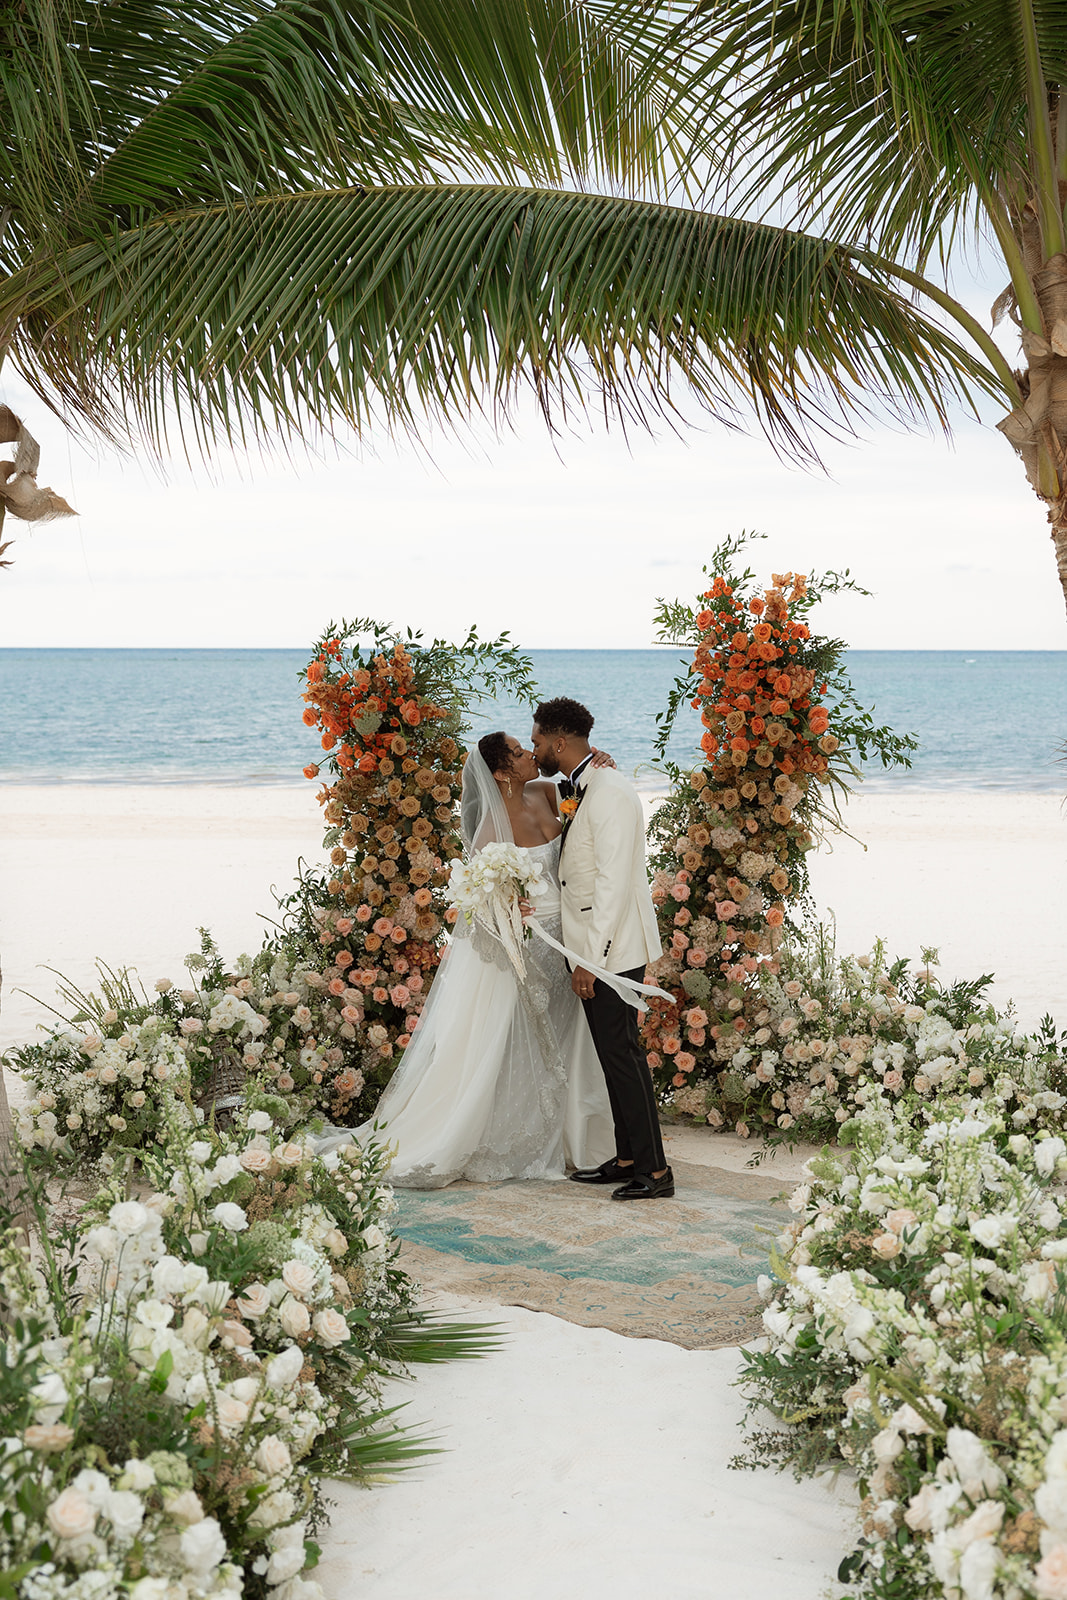 Lauren & Lee Fashion-Forward Destination Wedding in Mexico